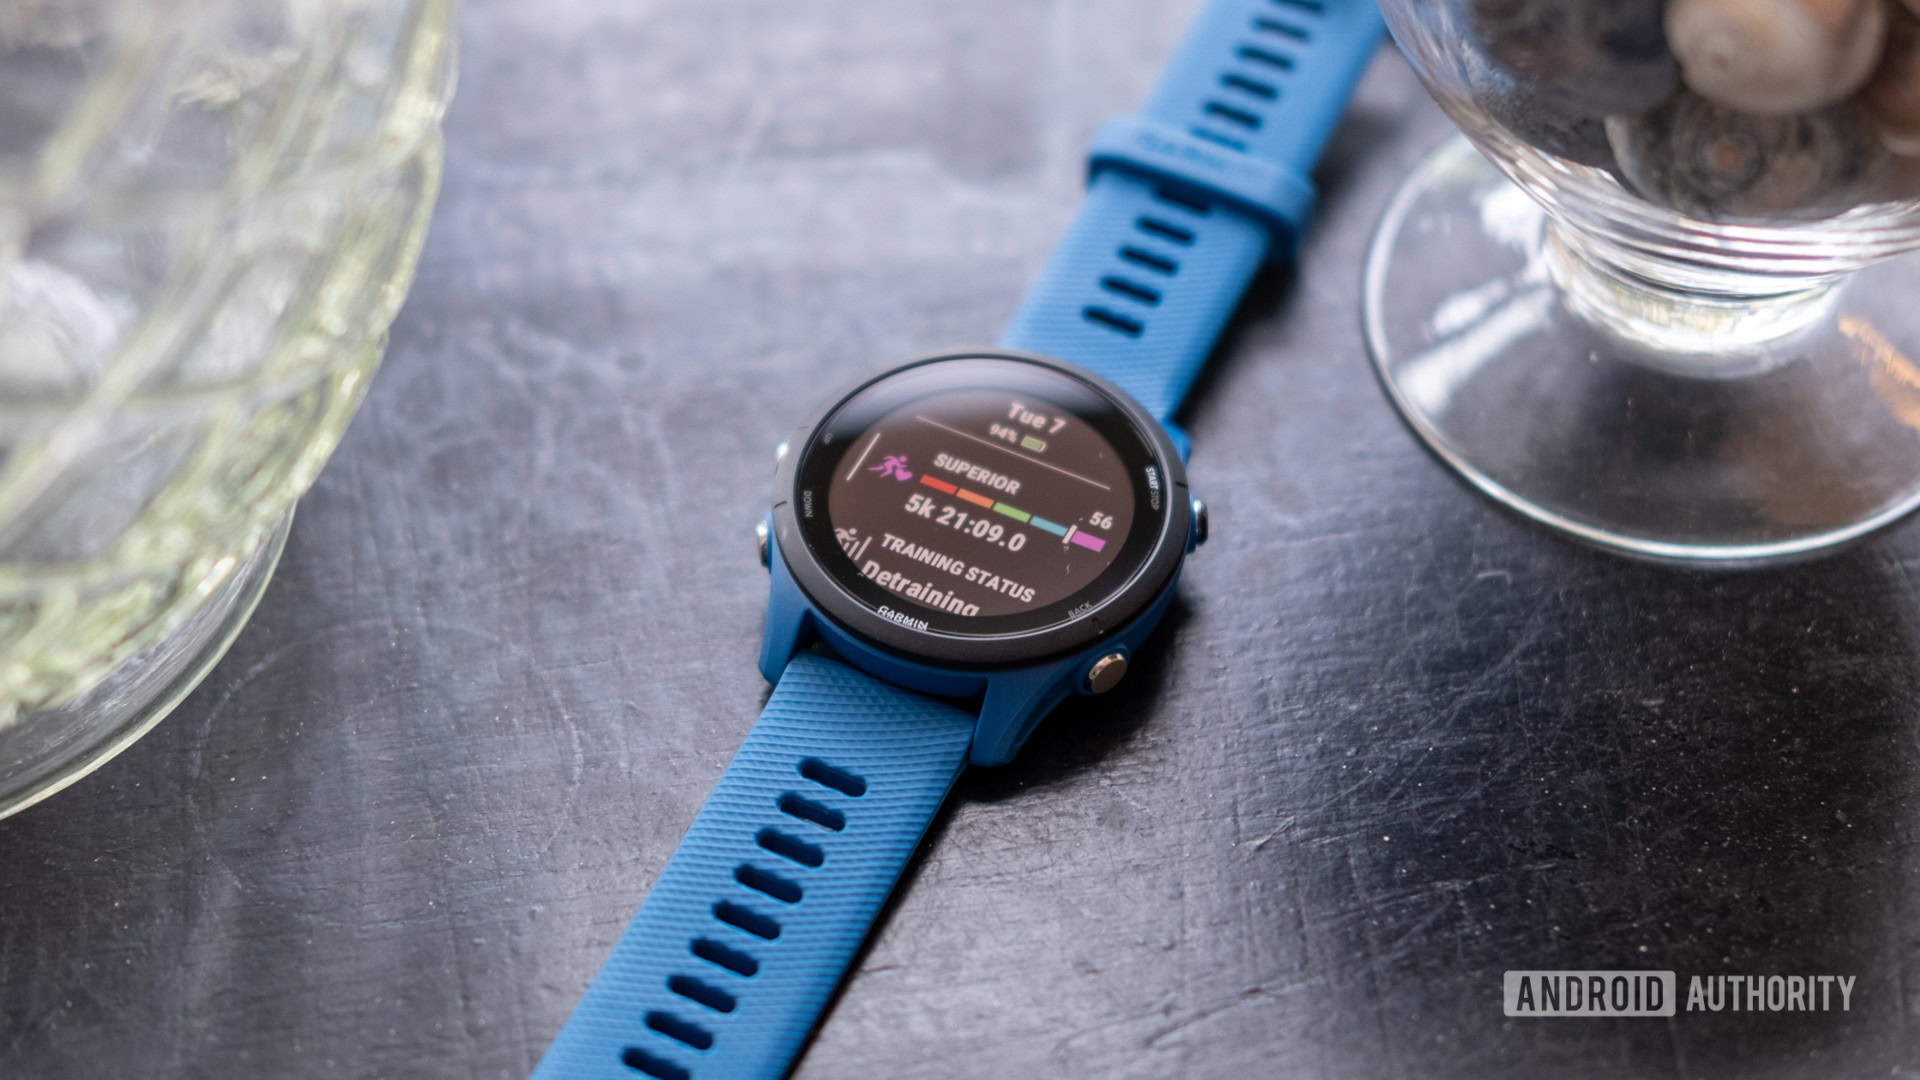 Garmin releases new beta update for Forerunner 255 smartwatches -   News